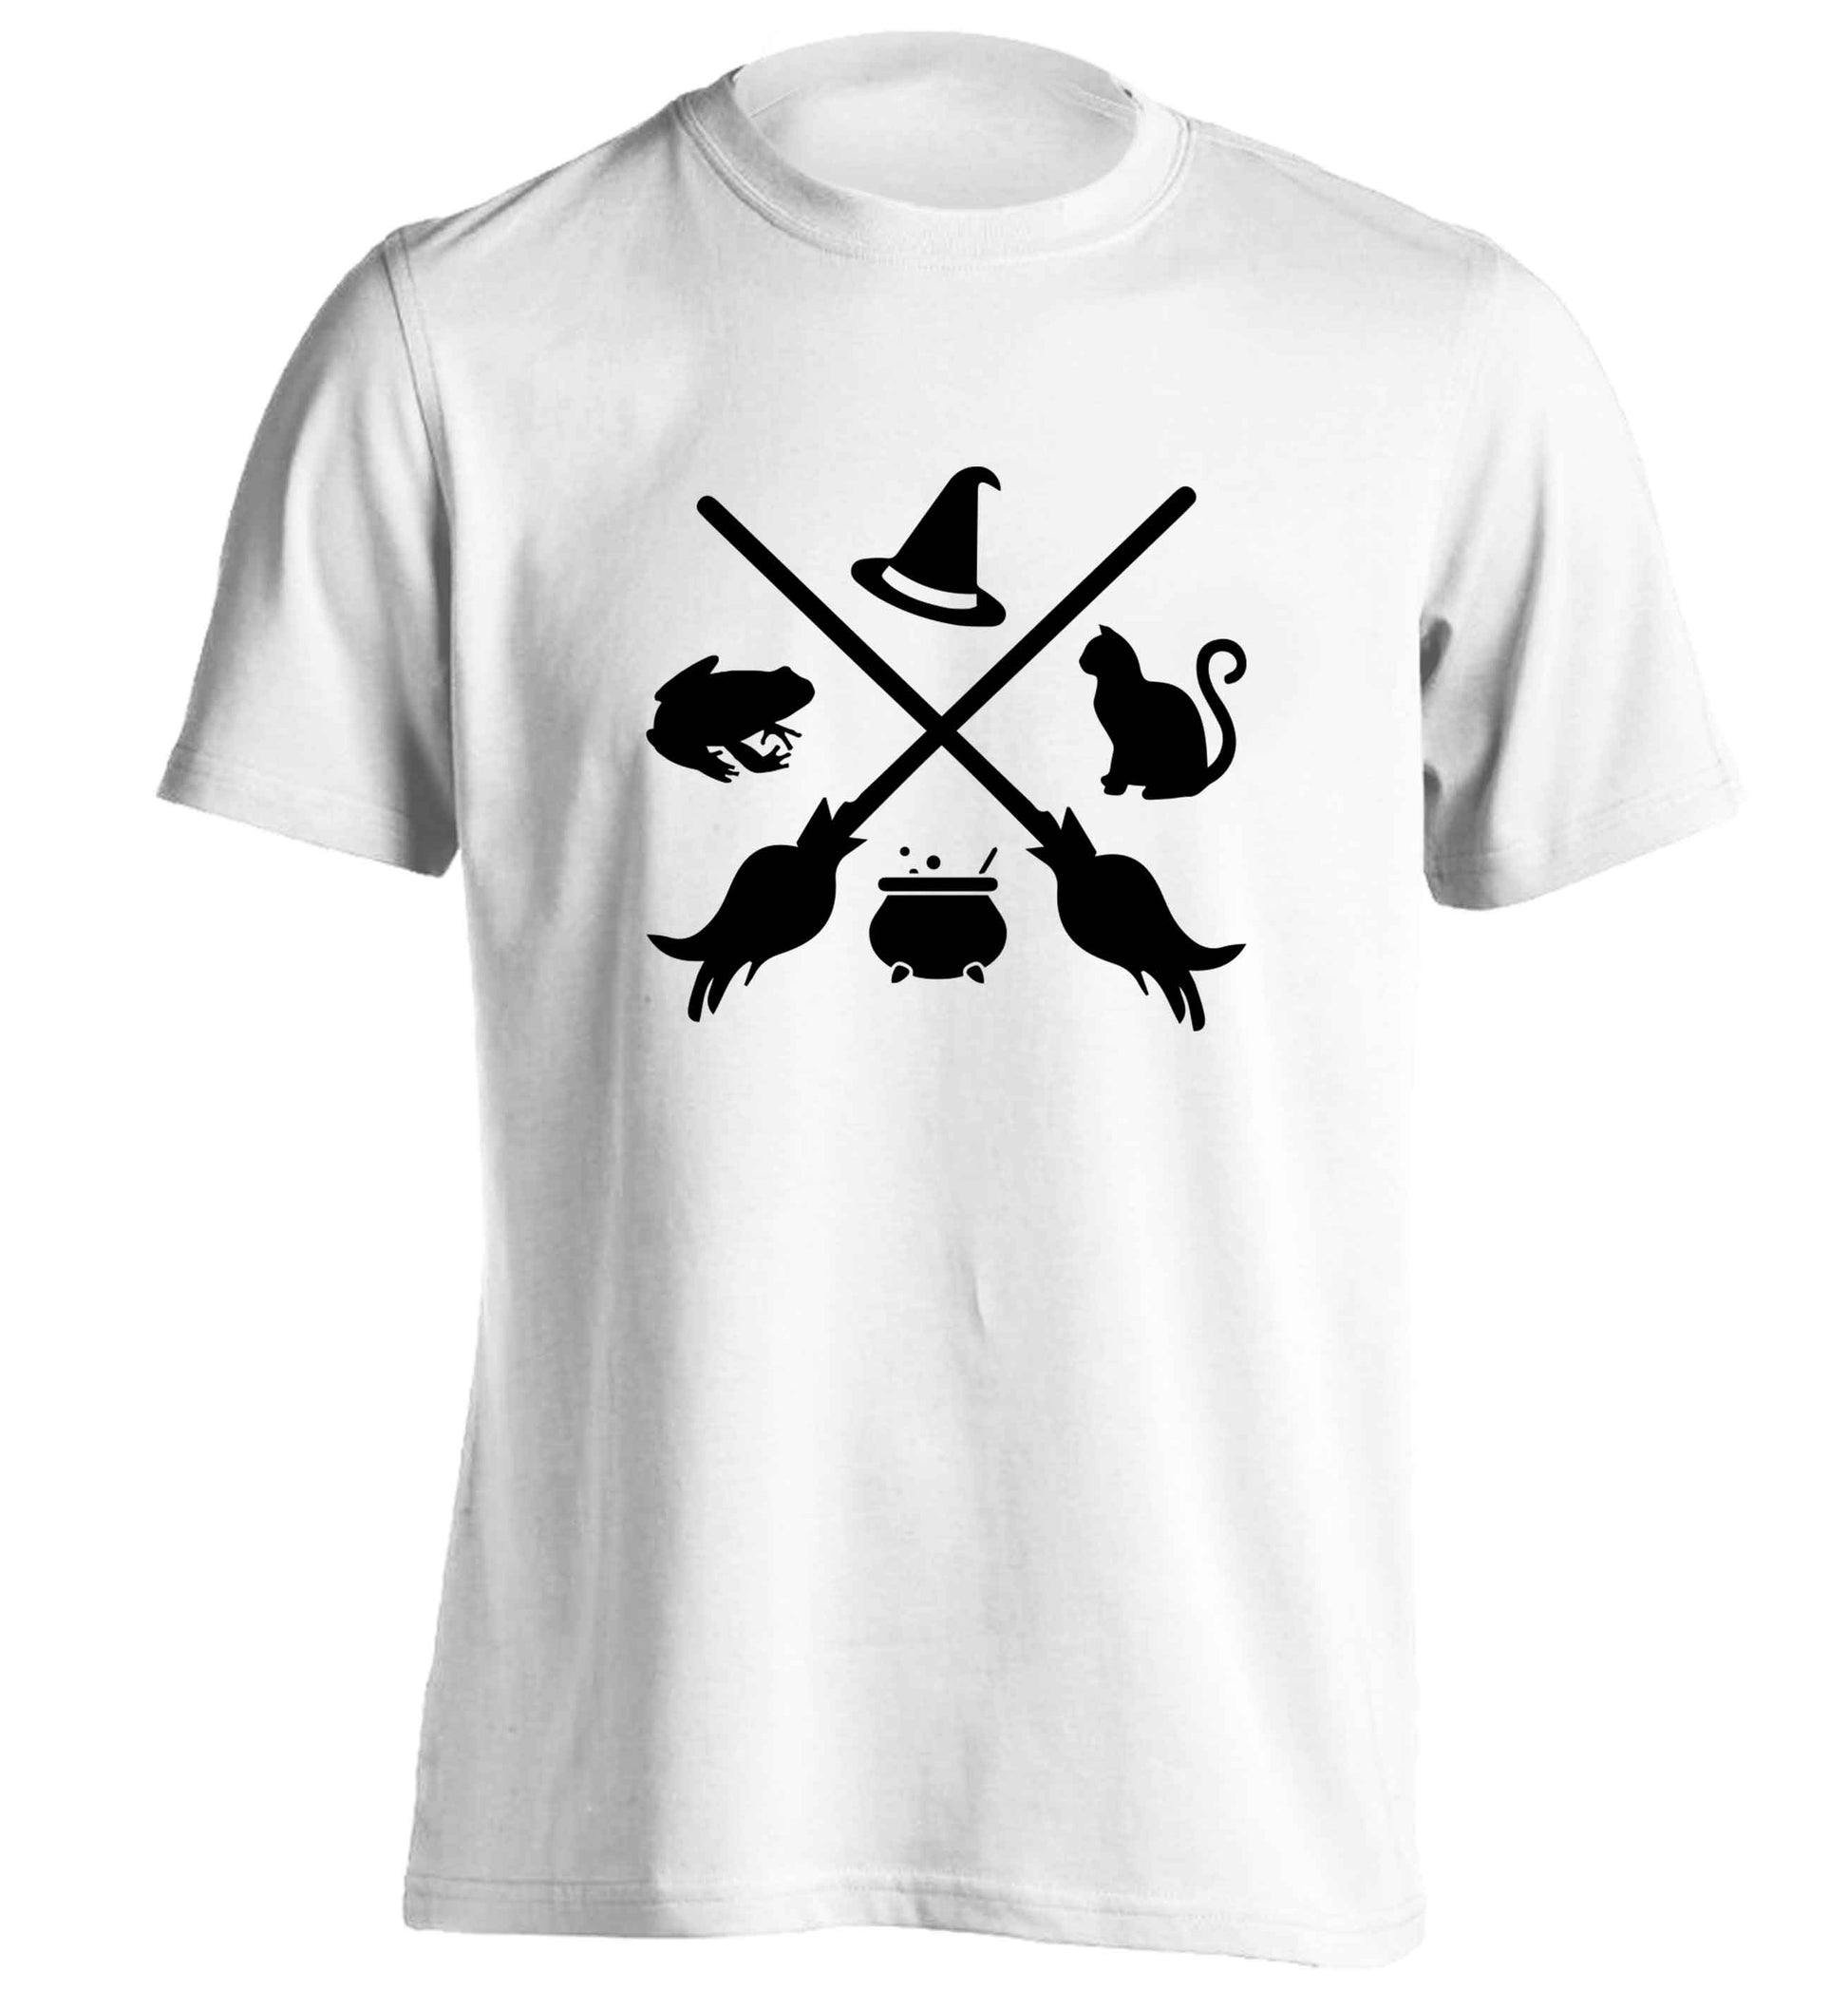 Witch symbol adults unisex white Tshirt 2XL